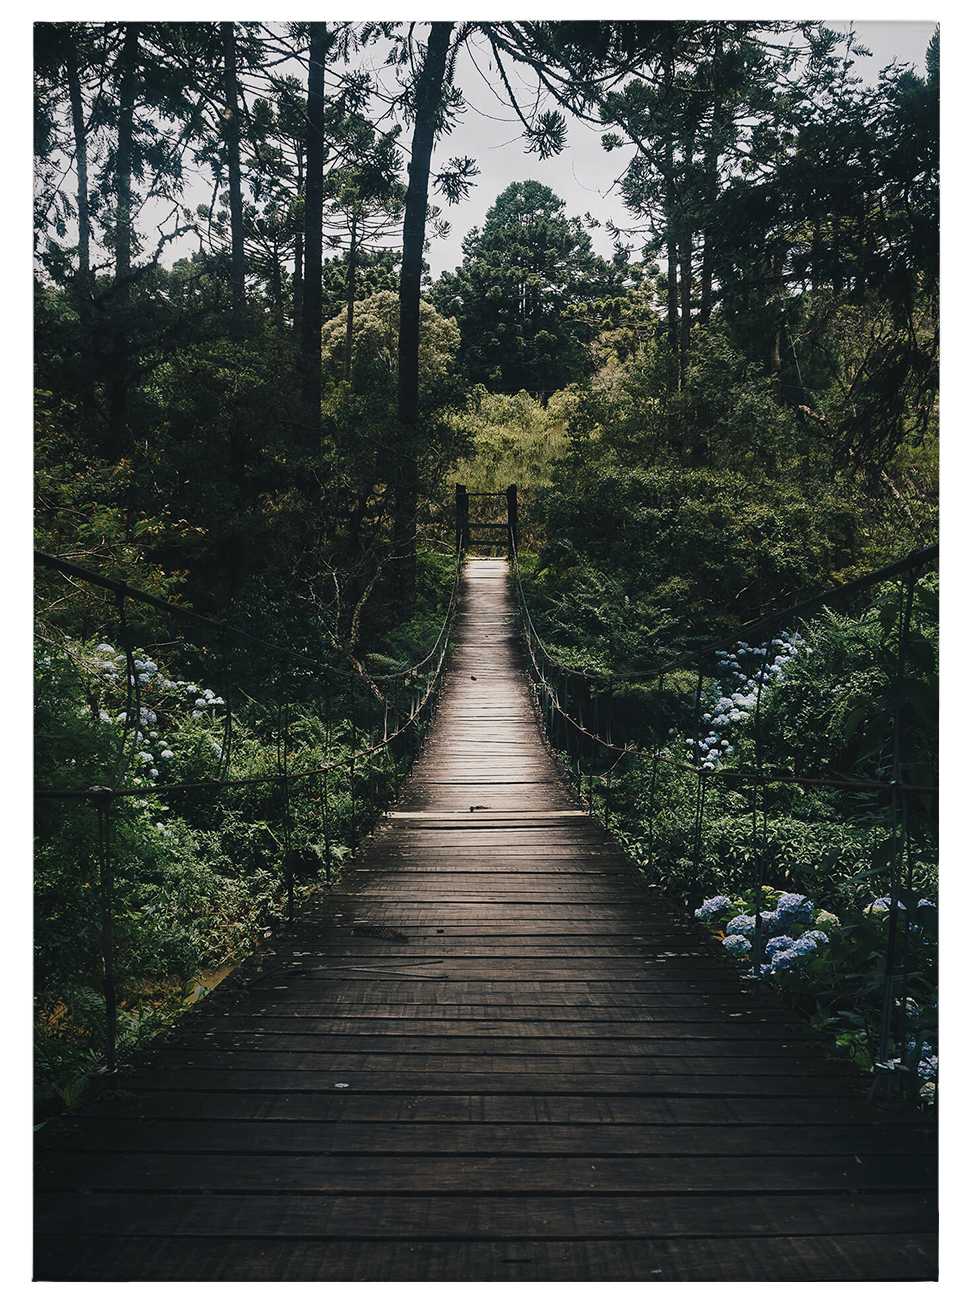             Leinwandbild Hängebrücke im Wald im Sommer – 0,50 m x 0,70 m
        